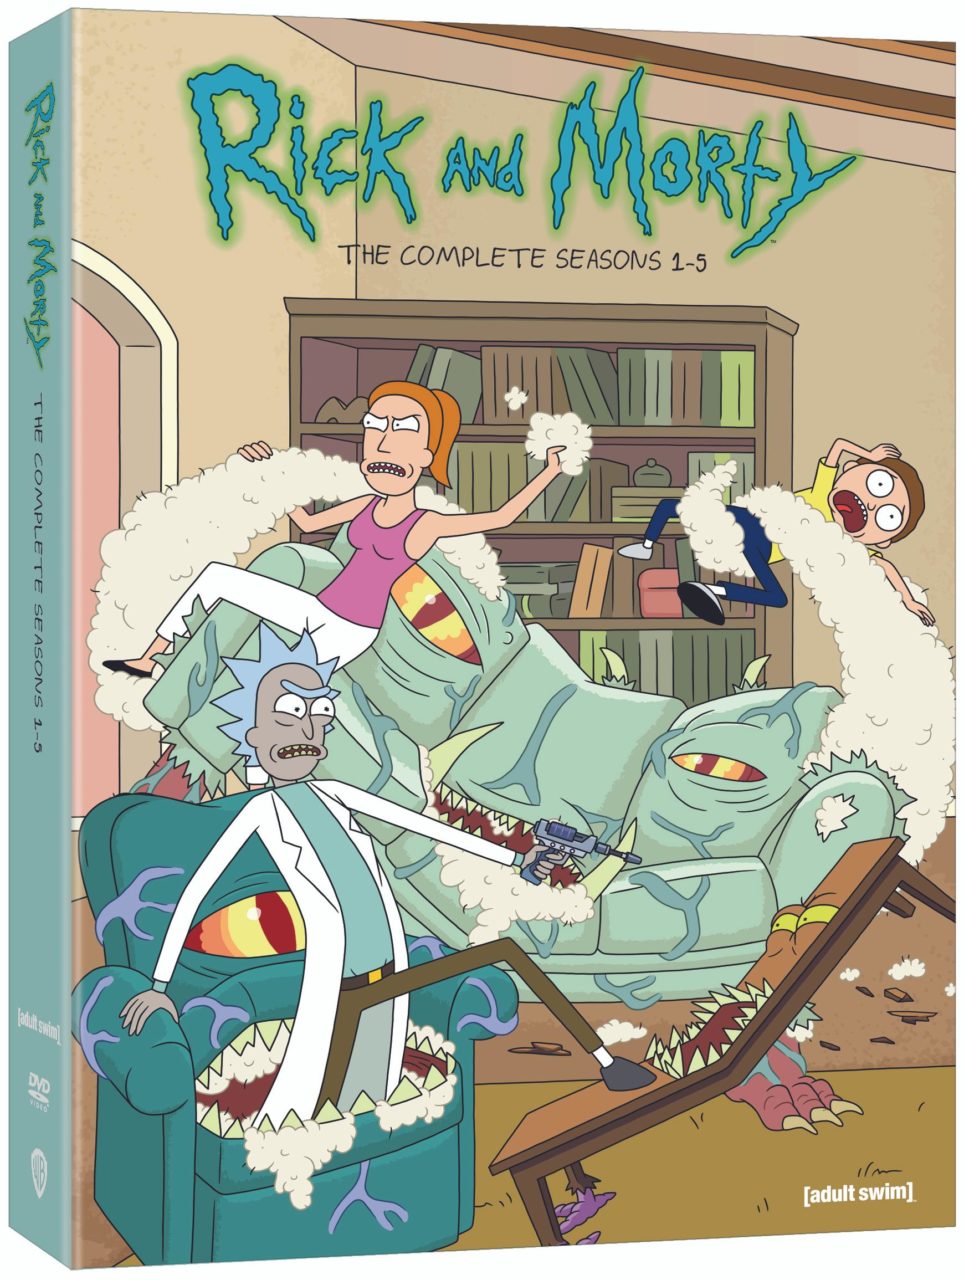 Rick And Morty: Seasons 1-5 DVD cover (Warner Bros. Home Entertainment)